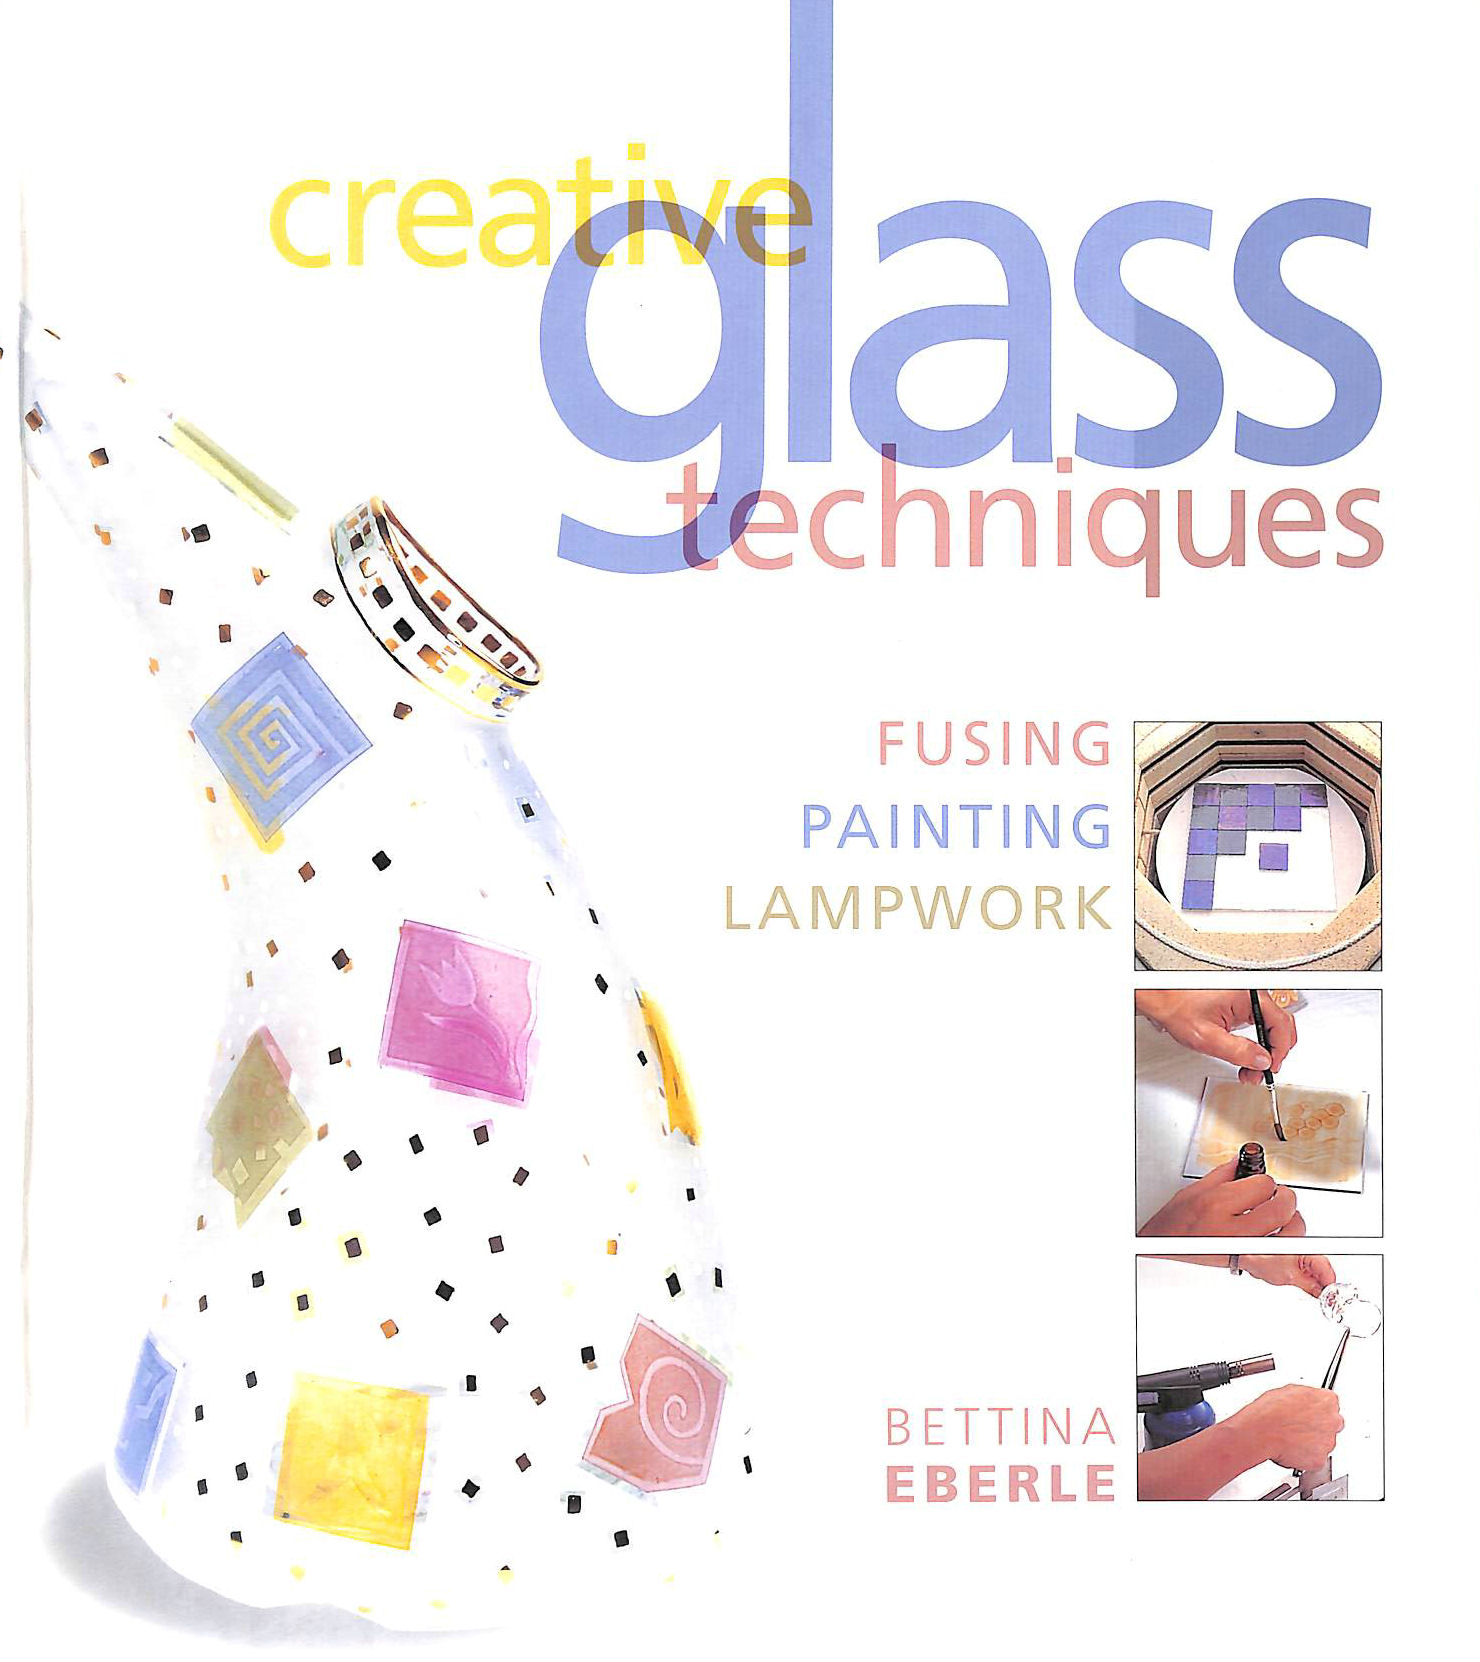  - Creative Glass Techniques: Fusing, Painting, Lampwork